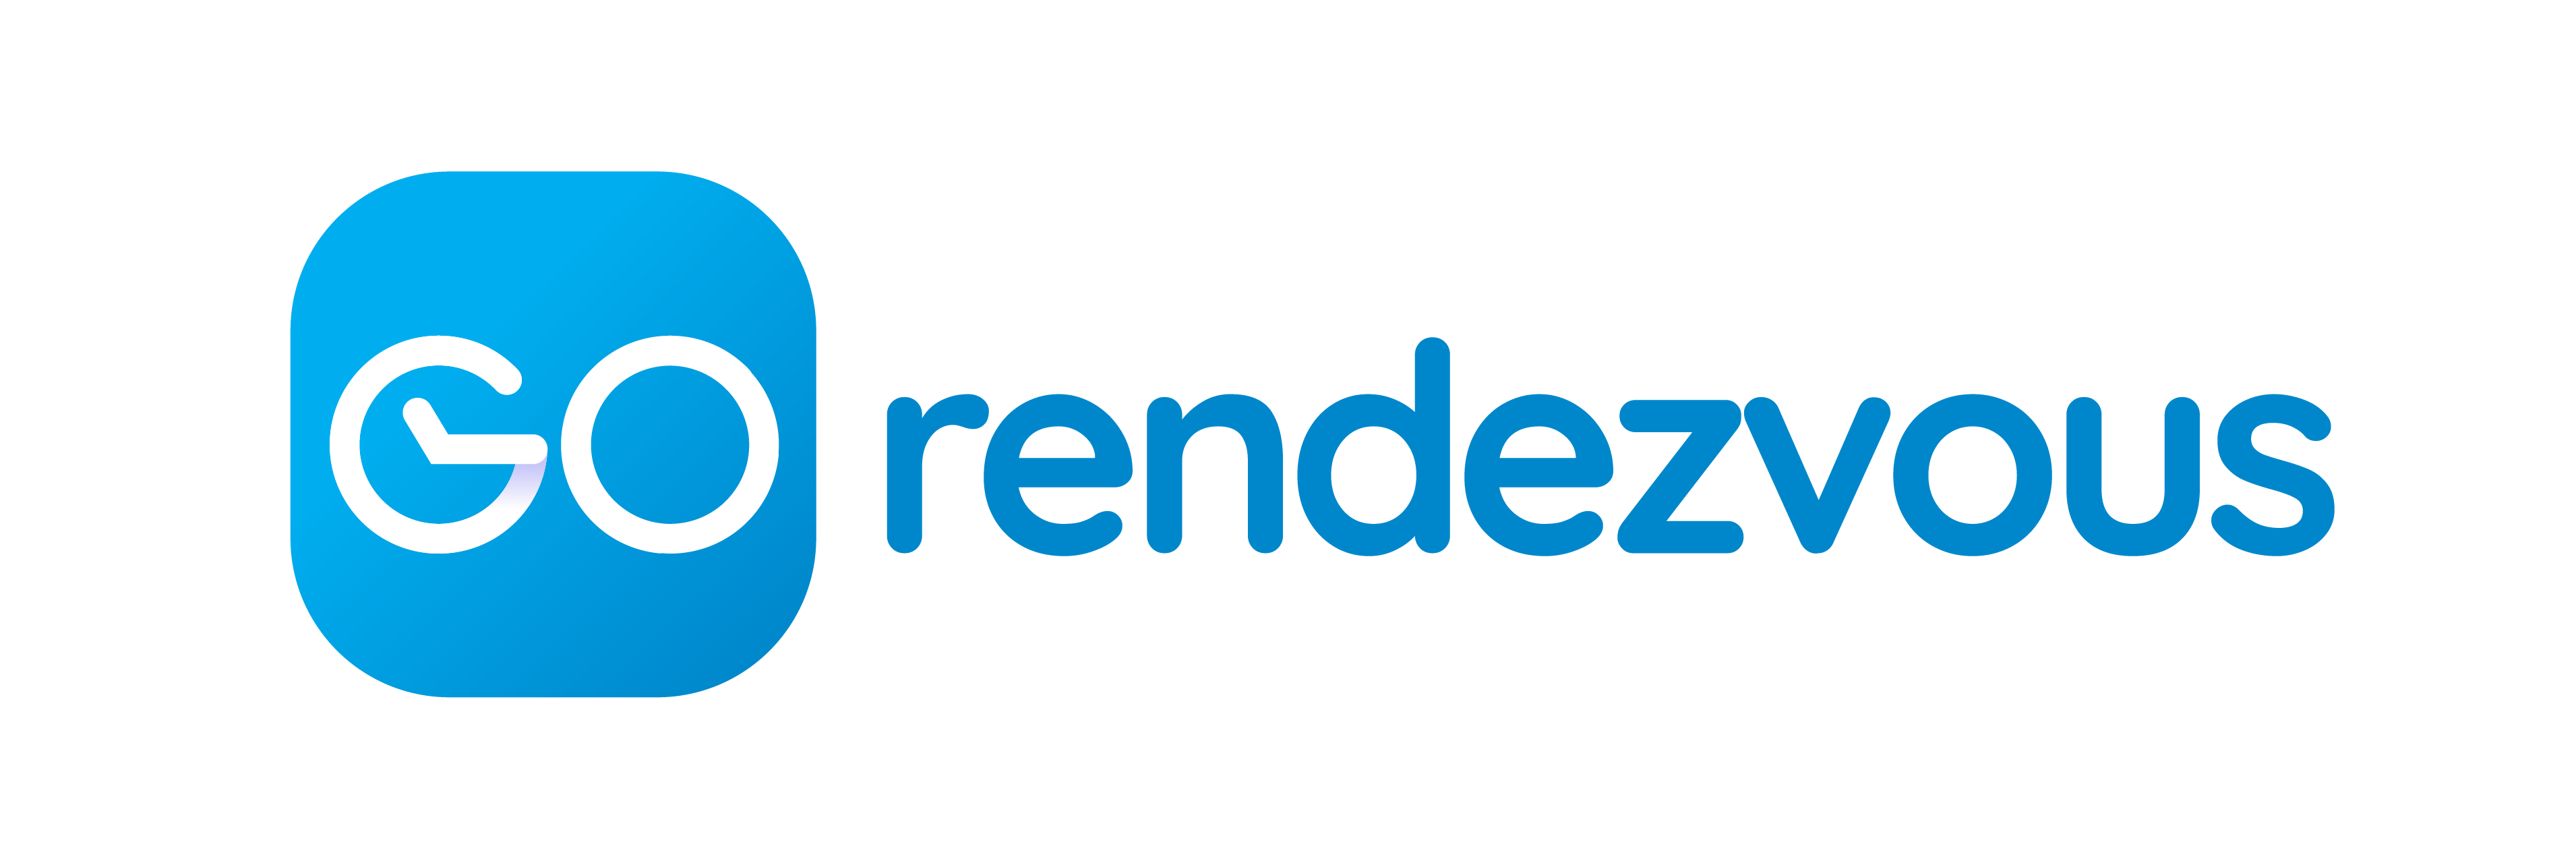 GOrendezvous - logo - bleu (2)